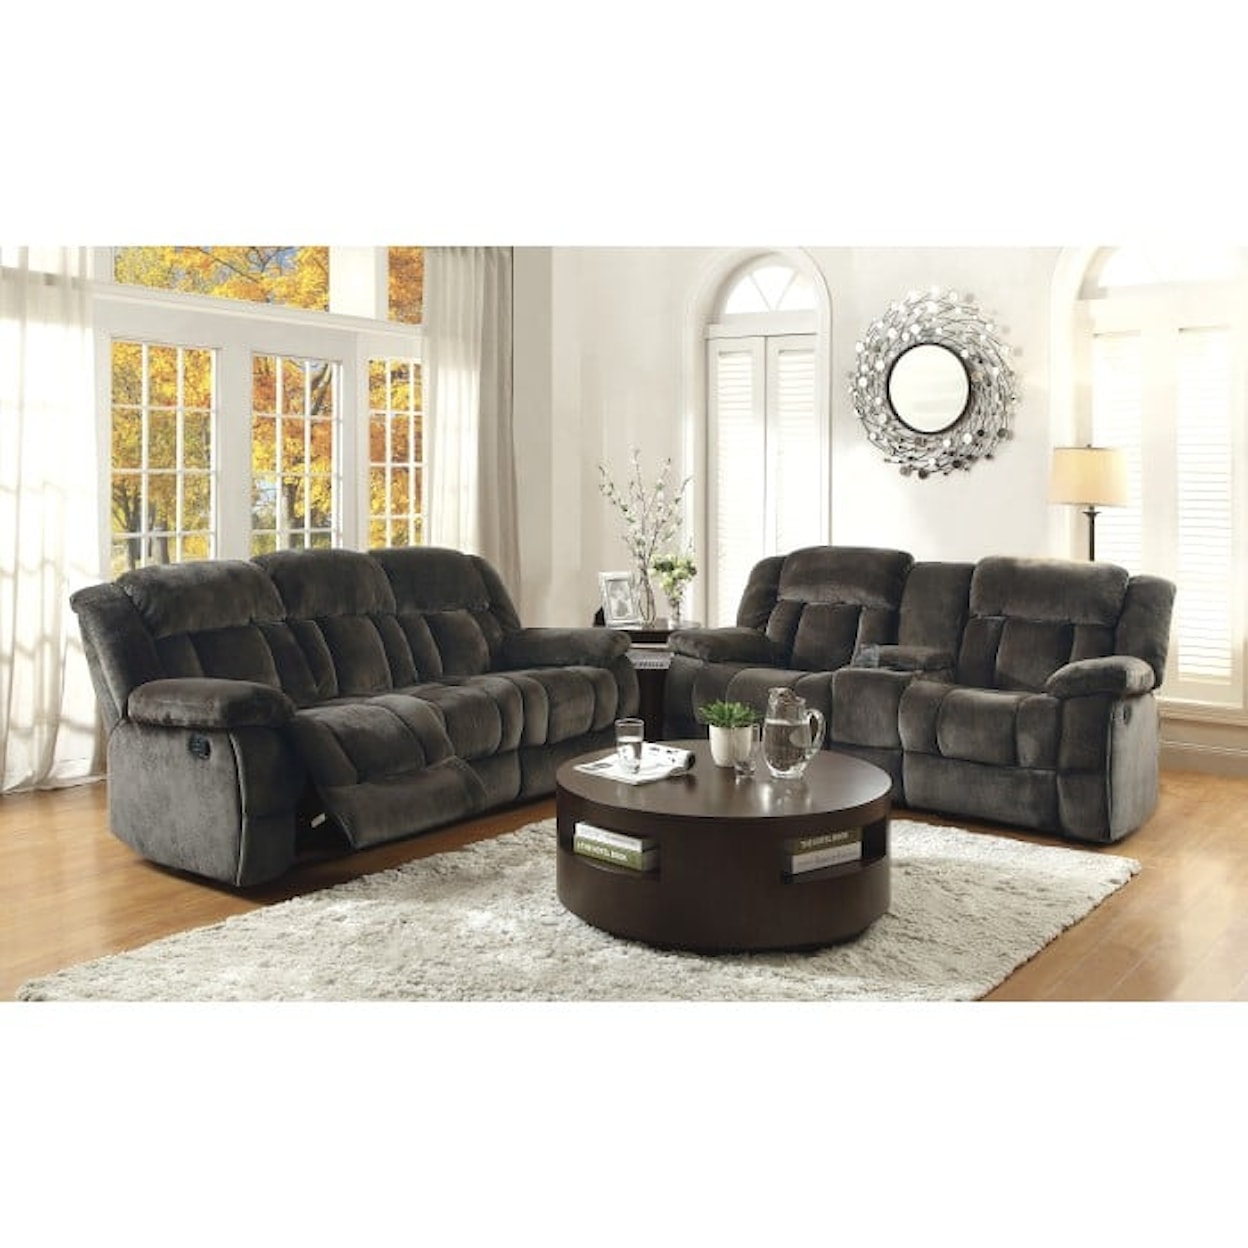 Homelegance Furniture Laurelton Double Reclining Sofa